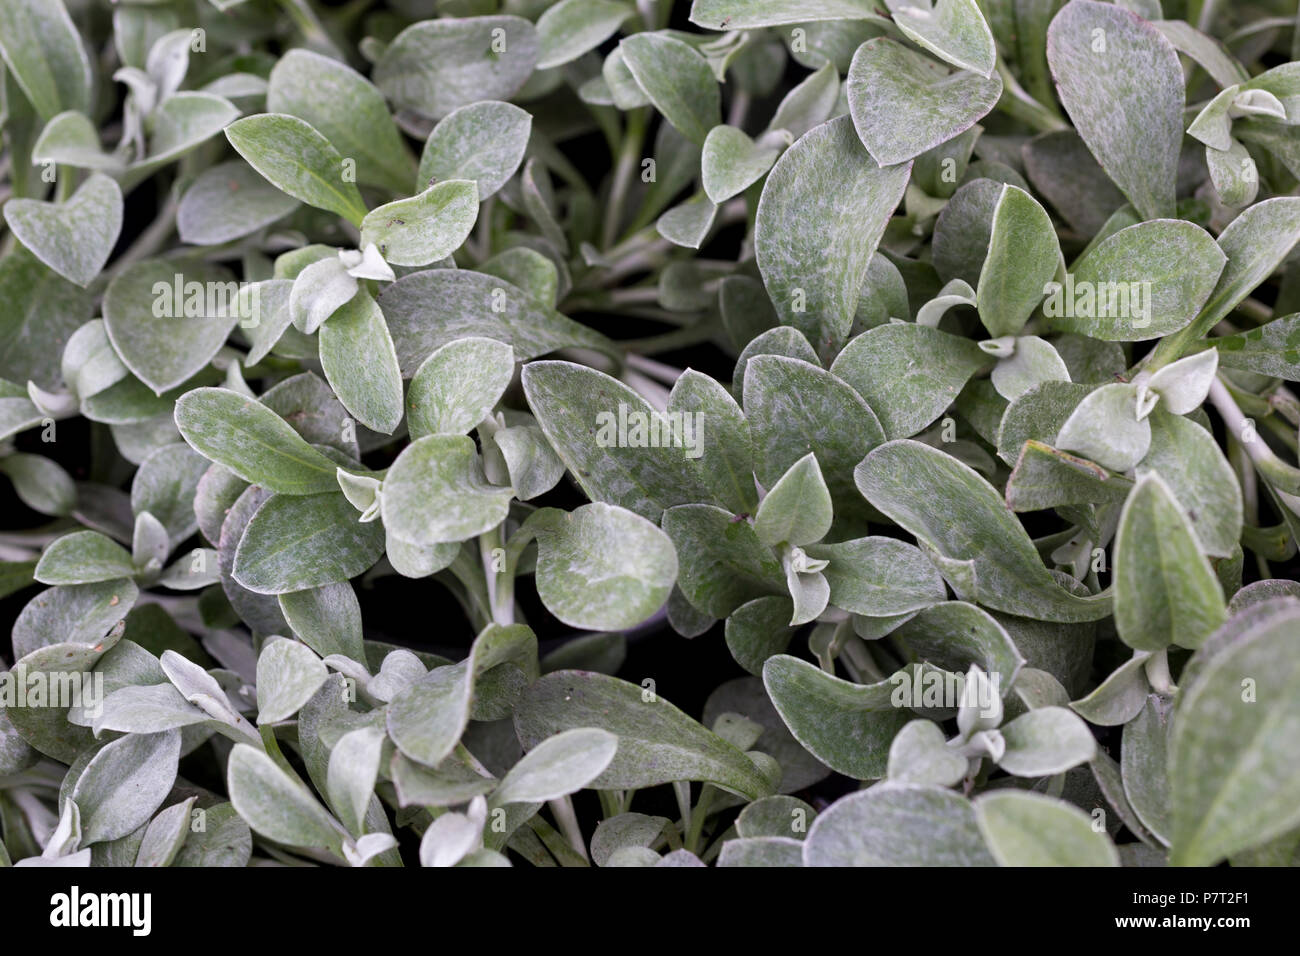 Helichrysum petiolare 'Moes Silver' Stock Photo